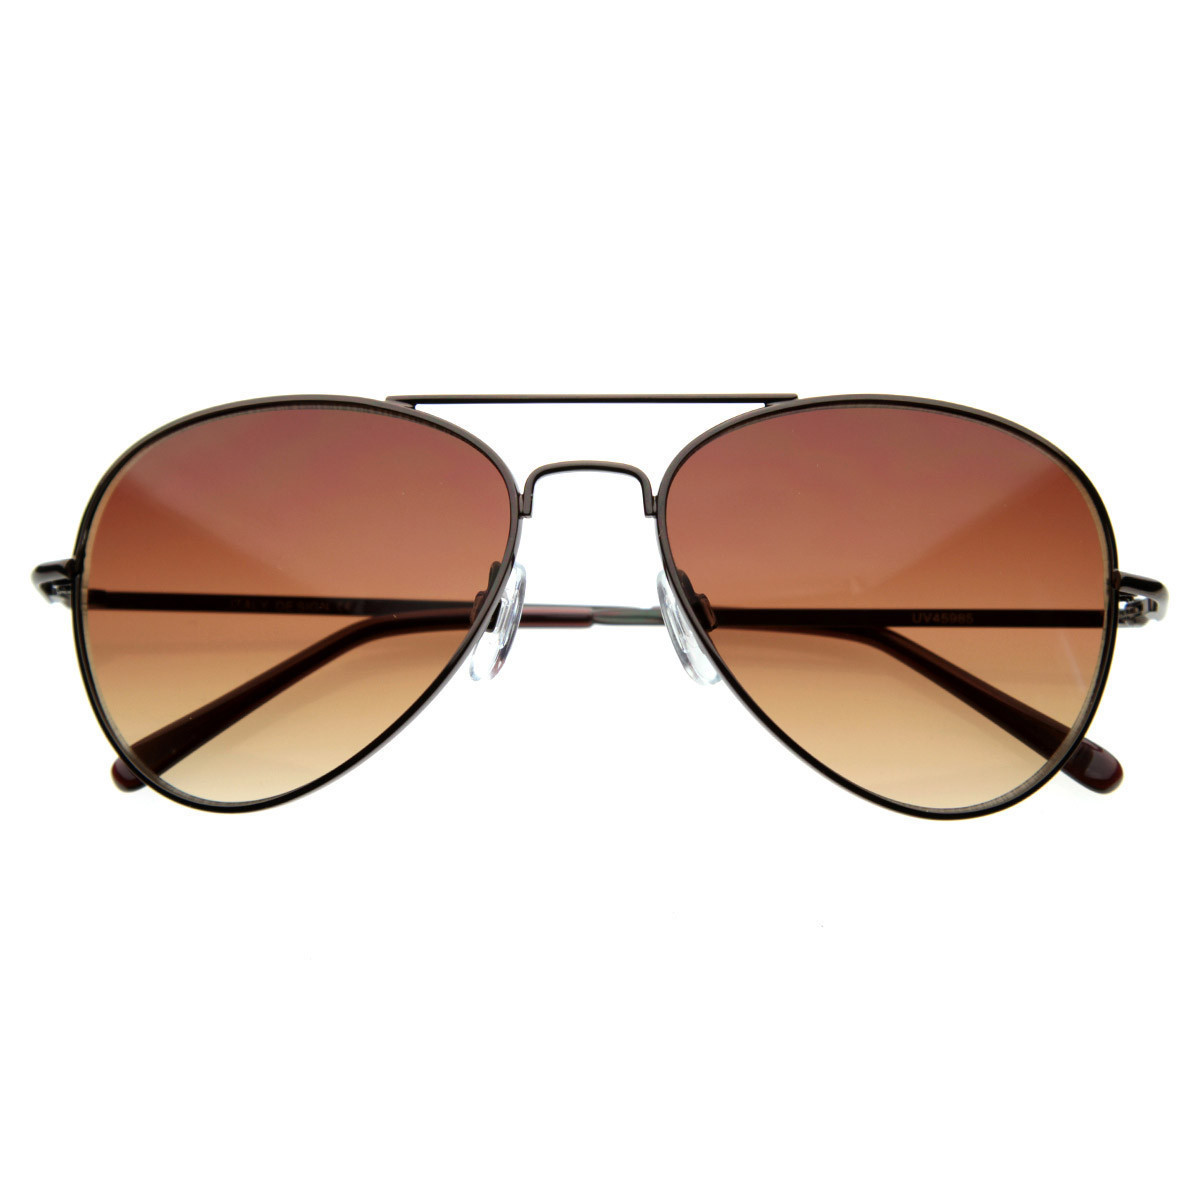 Small Classic Aviator Sunglasses 50mm Aviators - 1372 - Gold